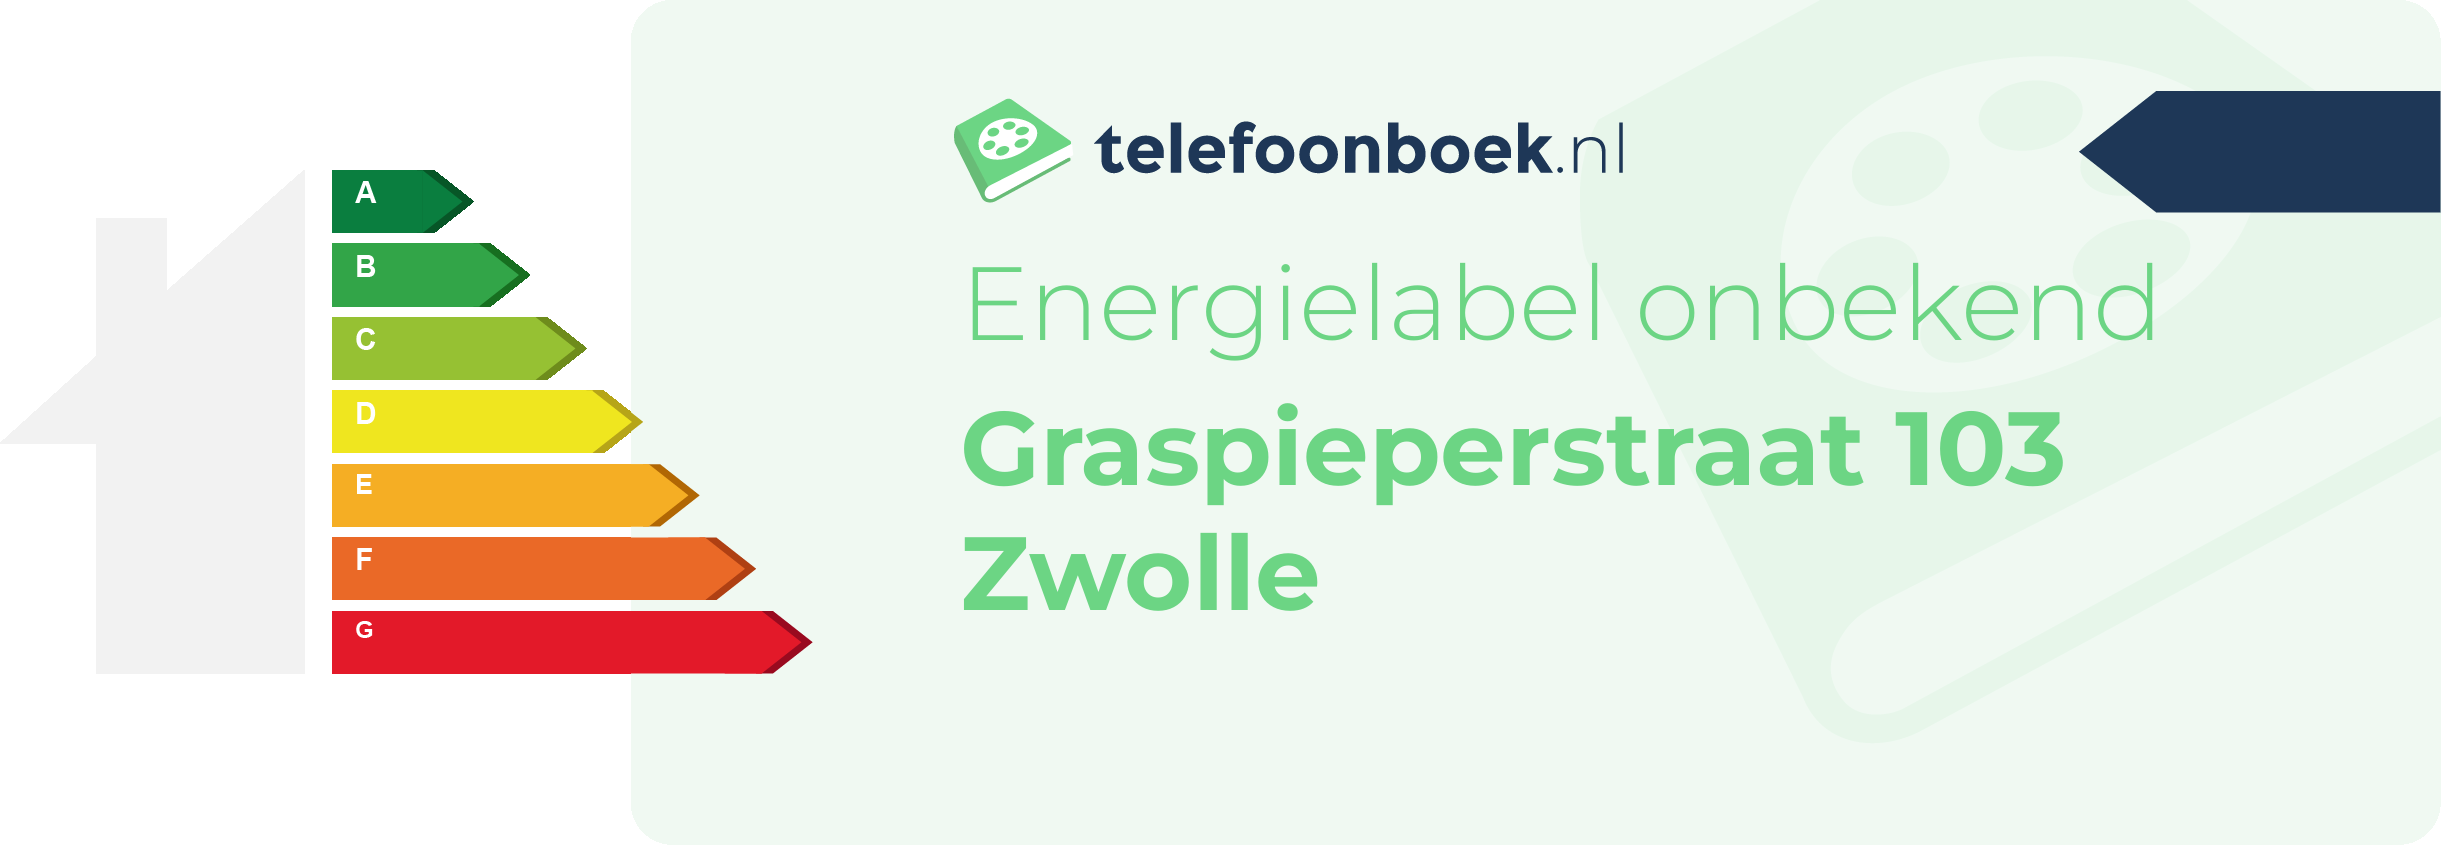 Energielabel Graspieperstraat 103 Zwolle